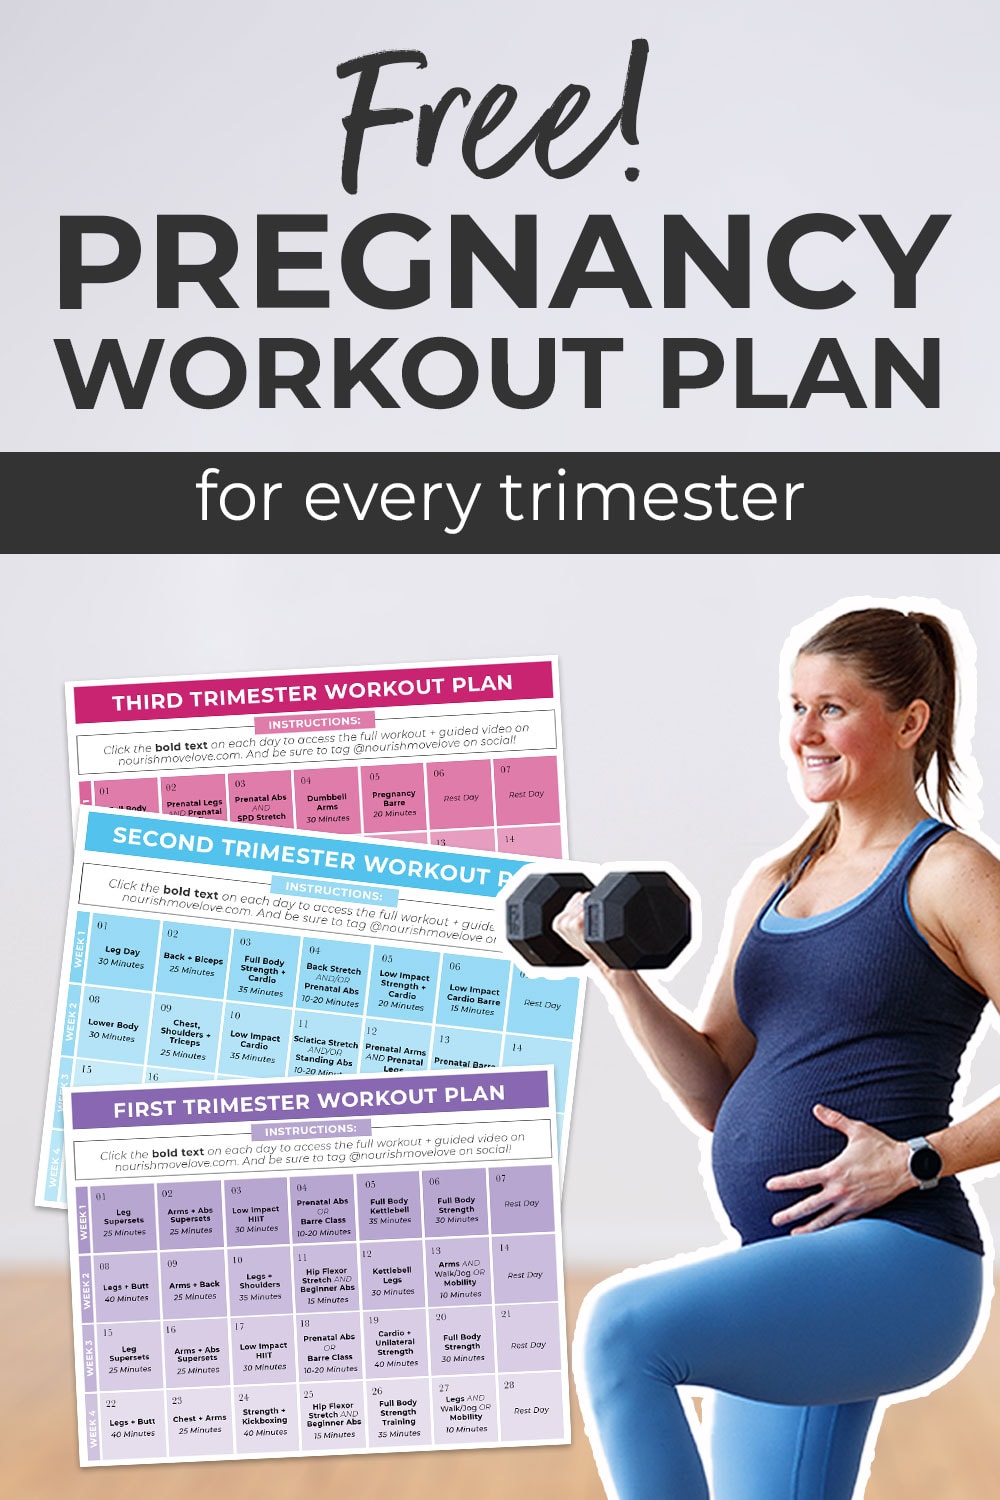 Free Pregnancy Workout Plan (by Trimester) Nourish Move Love